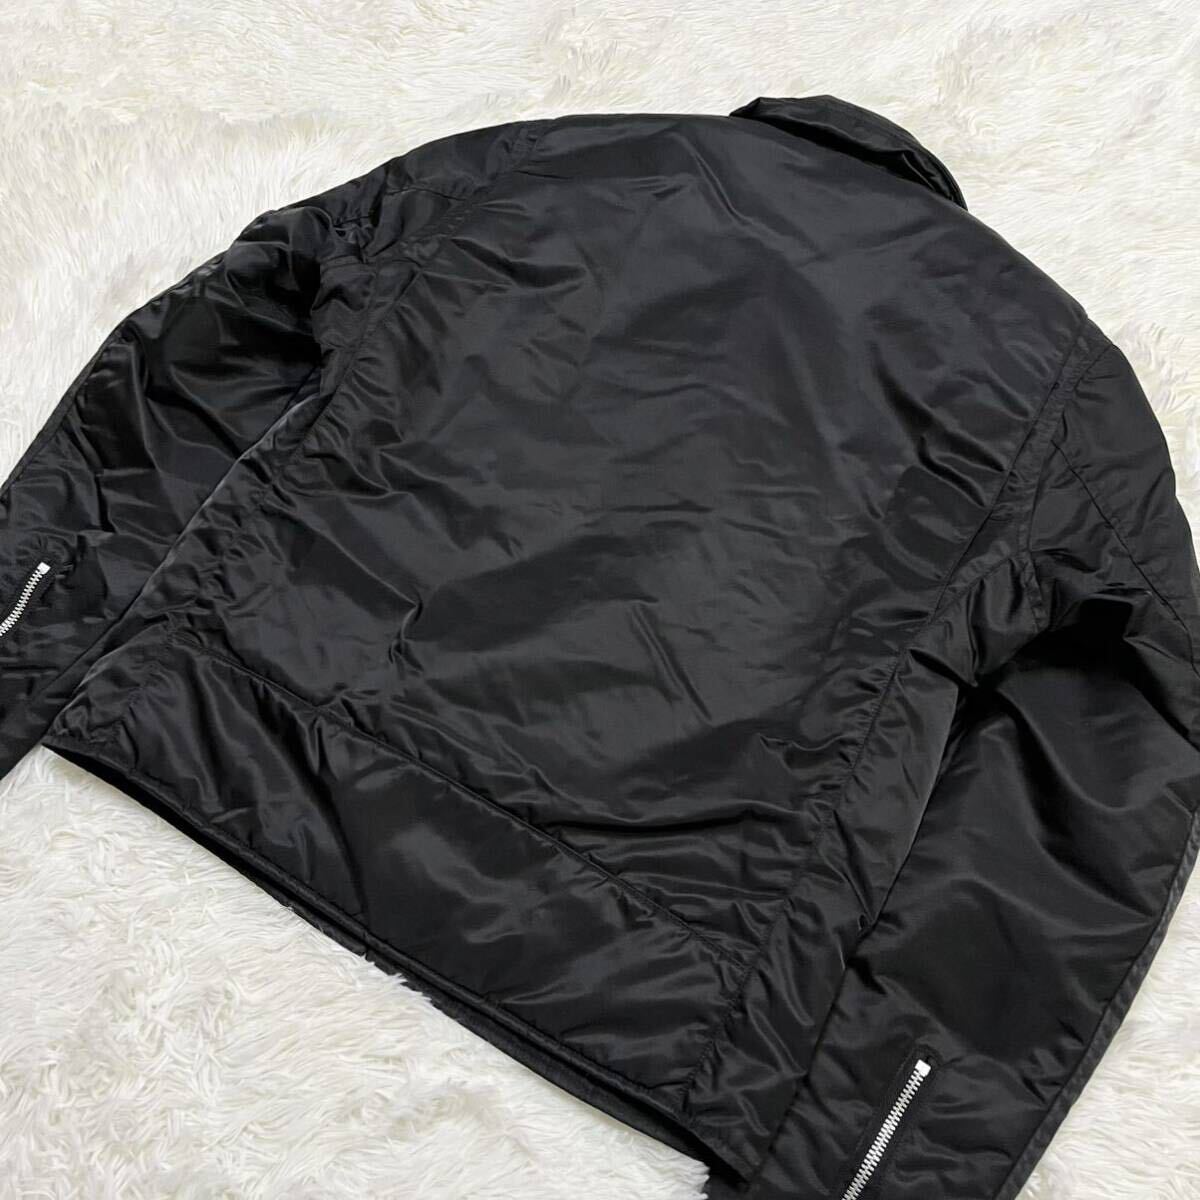  ultimate beautiful goods super rare lining camouflage Schott /Schott double rider's jacket blouson nylon quilting camouflage men's 40 L black black 